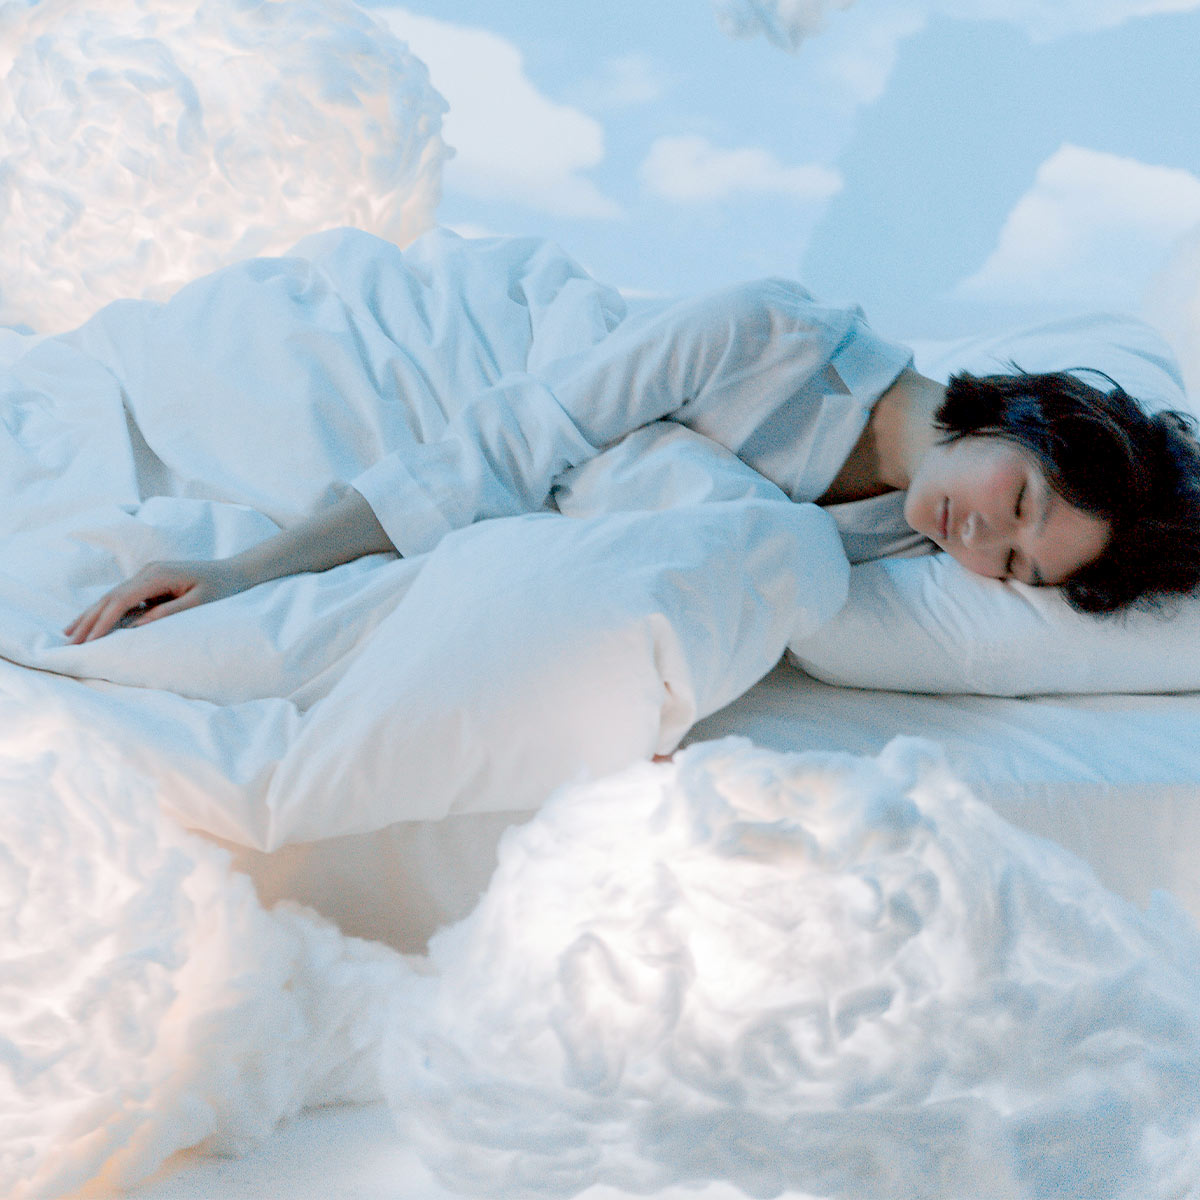 Sheepskin gives you a warm, comfortable sleep